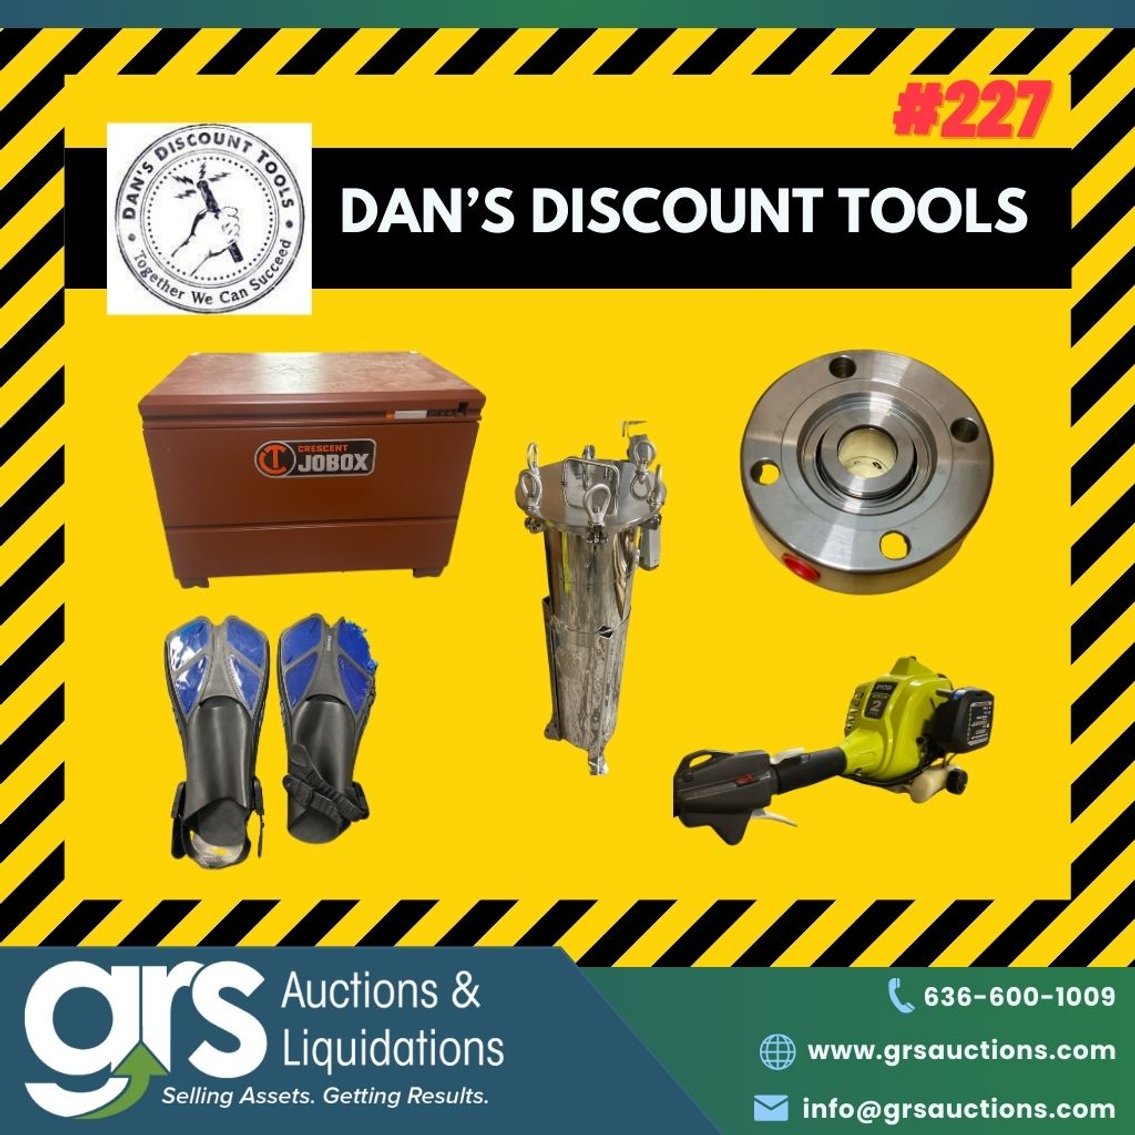 Dan's Discount Tools #227